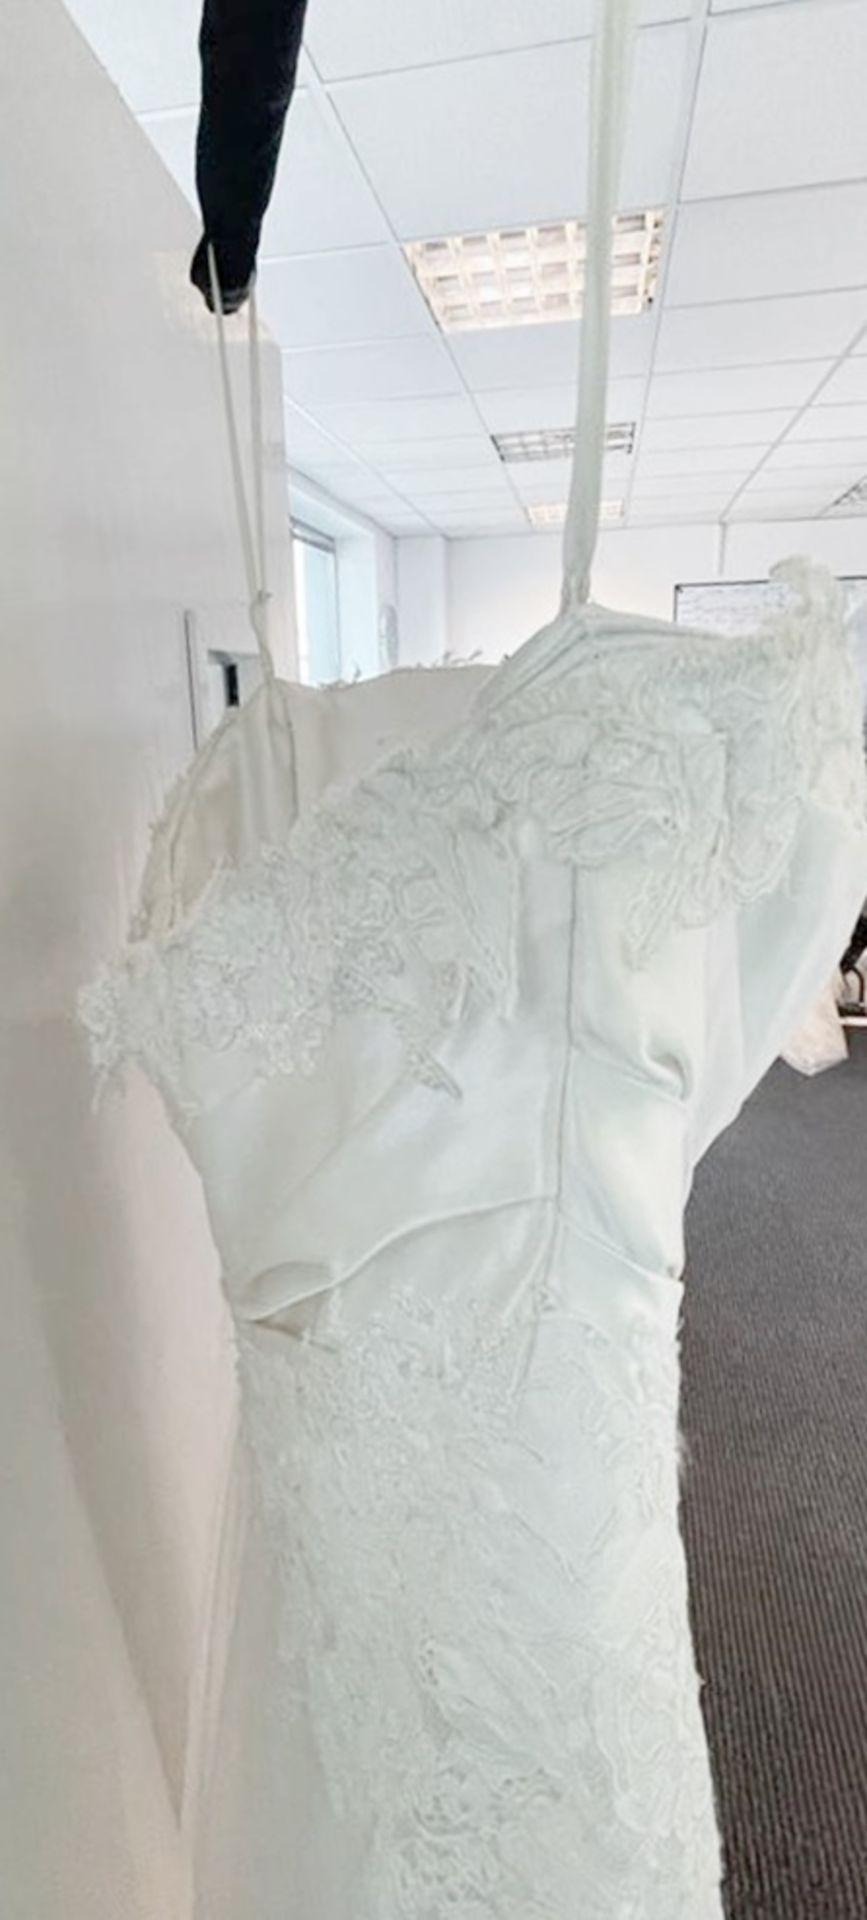 1 x LUSAN MANDONGUS / ANNASUL Y 'Infinity' Strapless Designer Wedding Dress - UK 12 - RRP £1,700 - Image 6 of 8